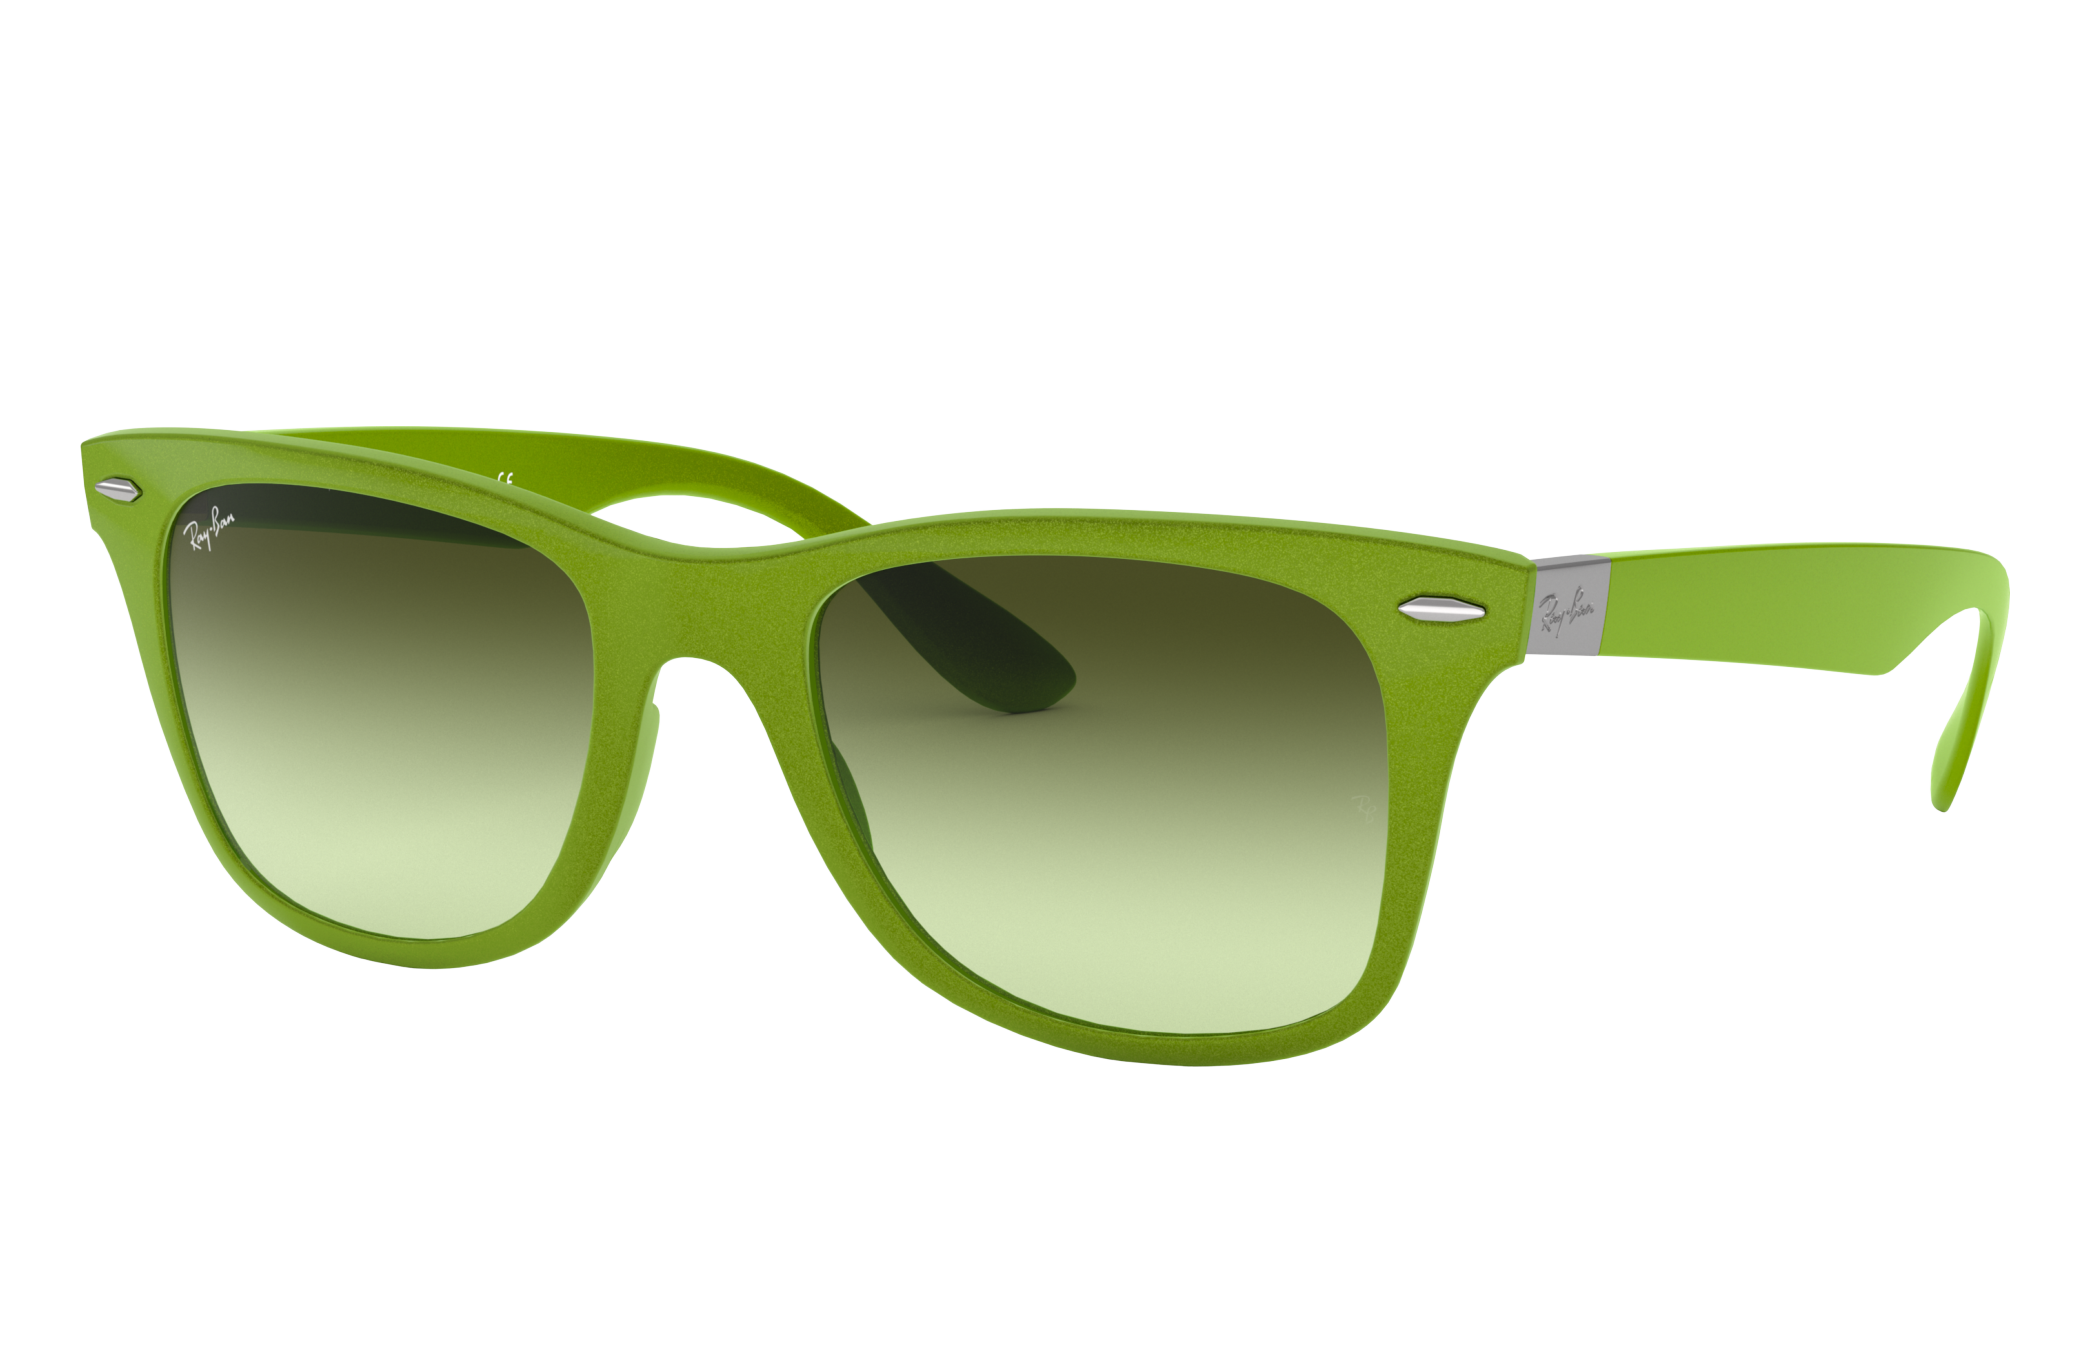 Wayfarer Liteforce Sunglasses in Green and Green | Ray-Ban®